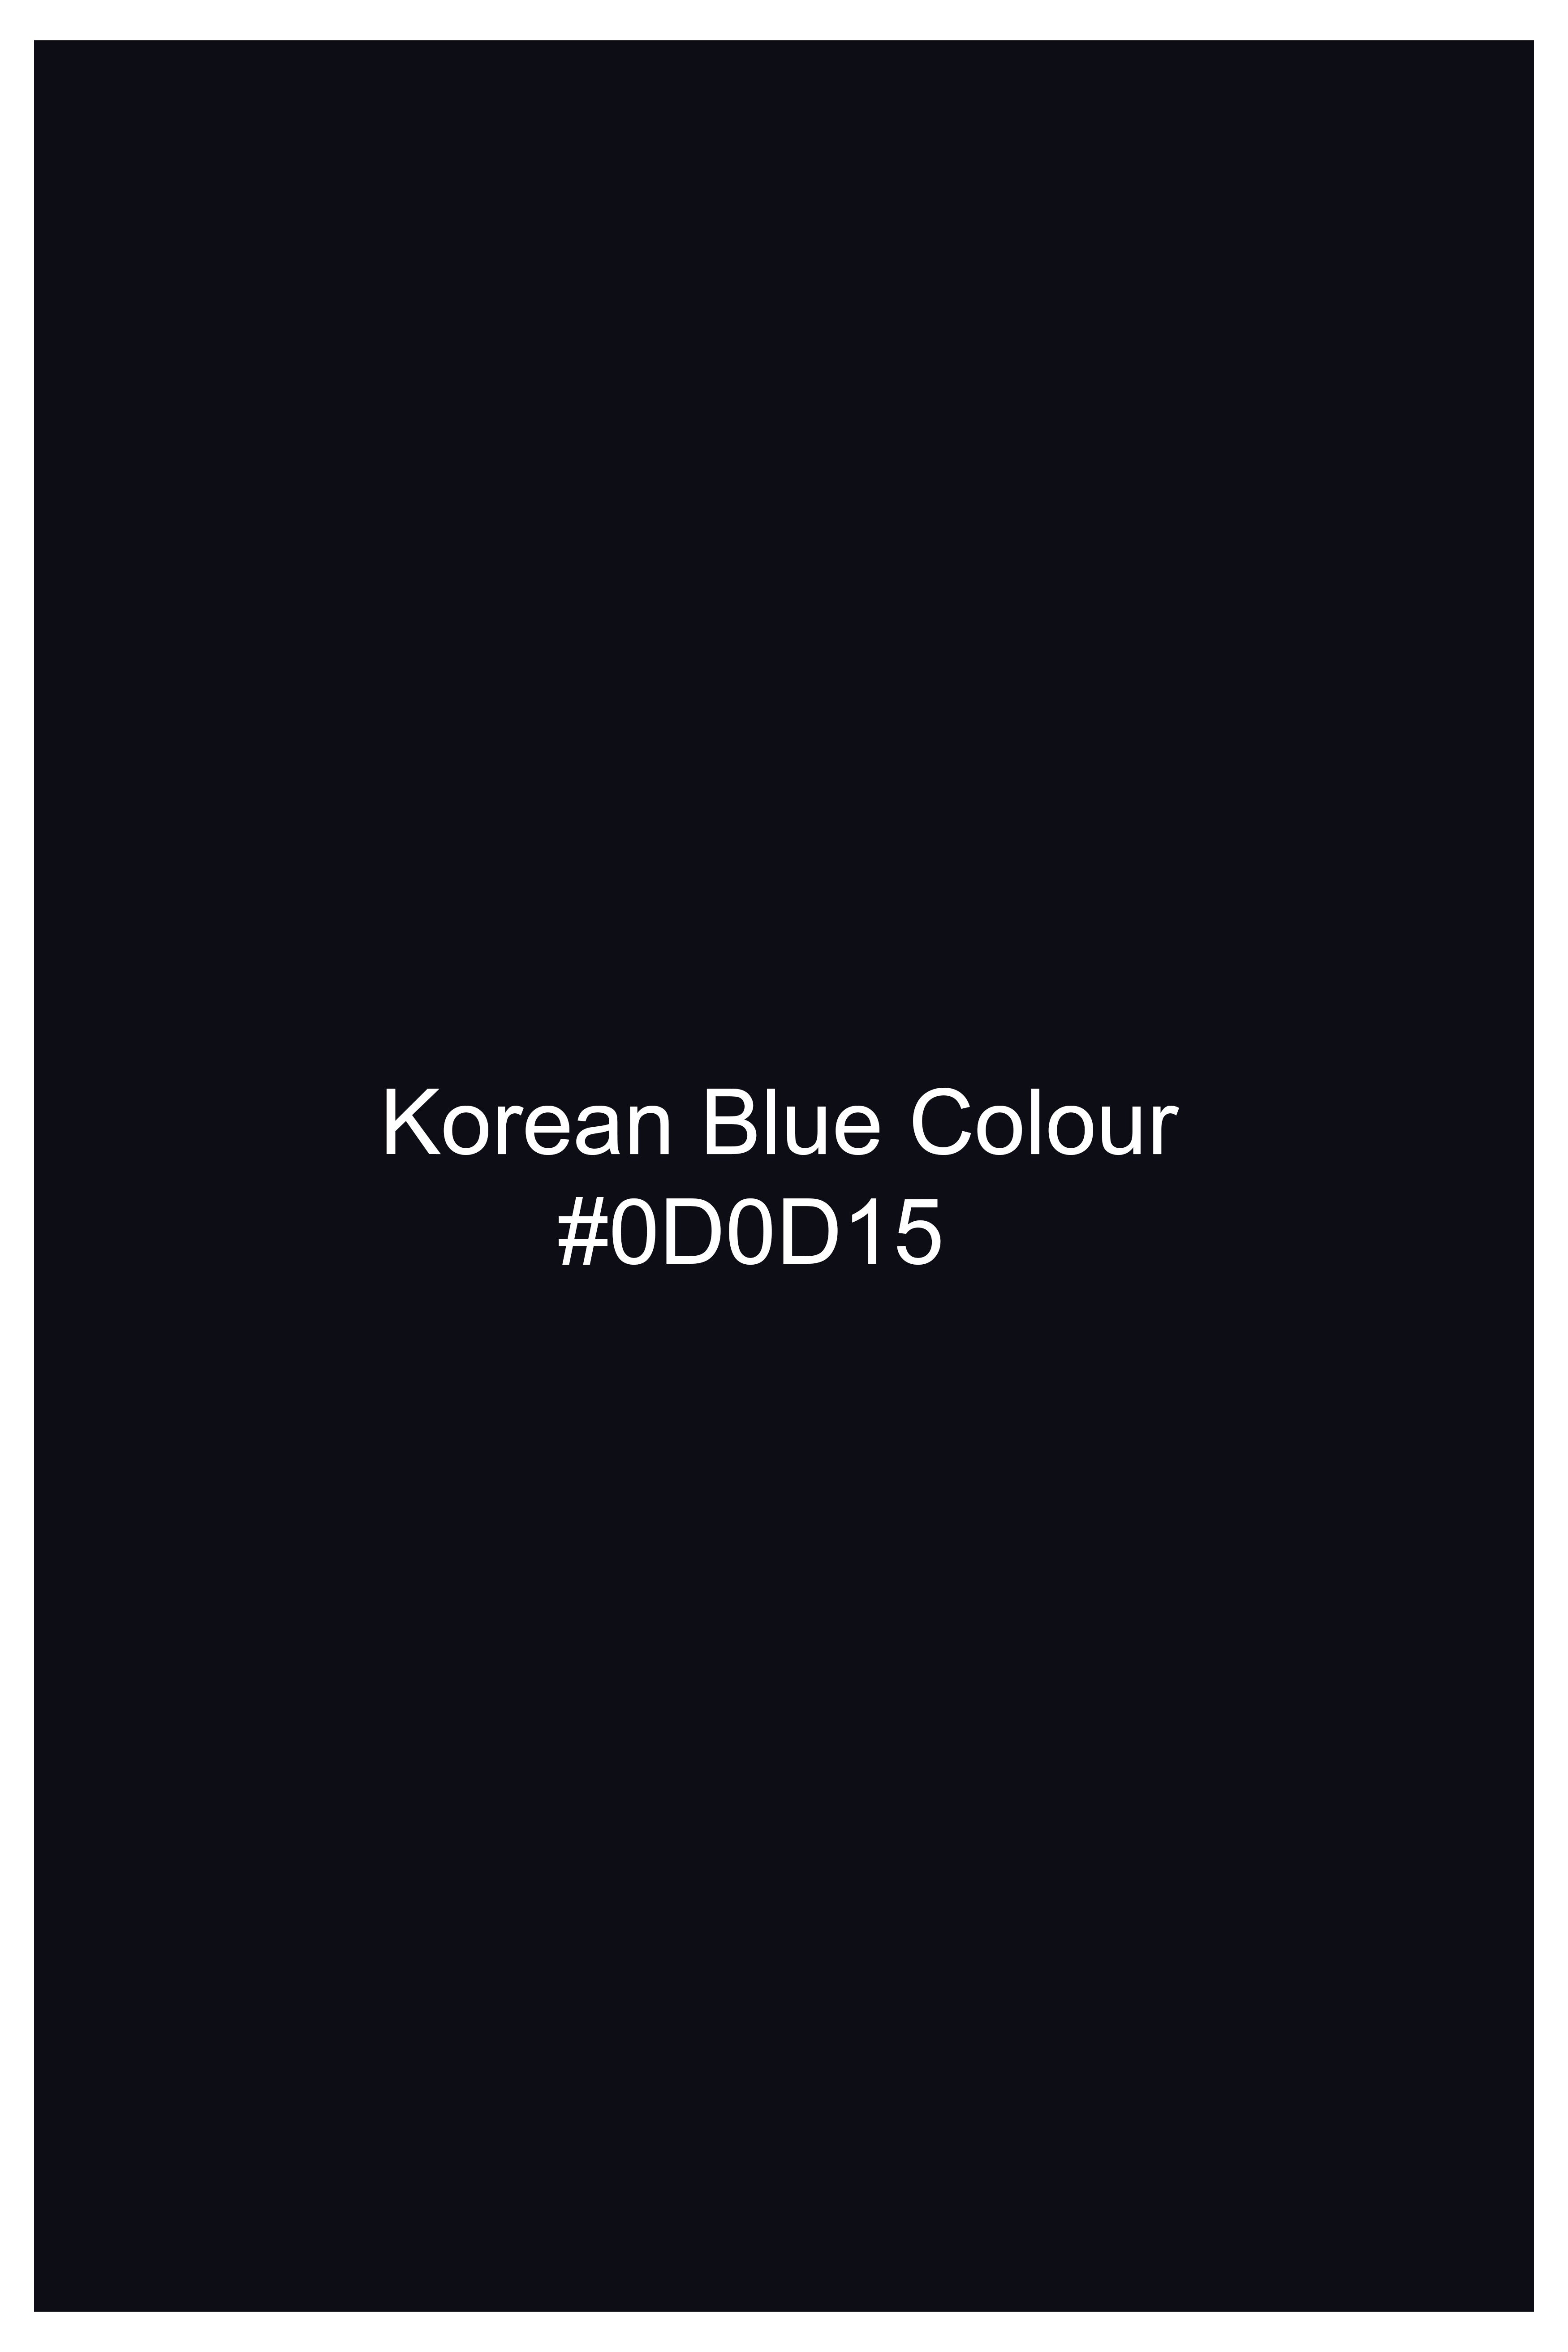 Korean Blue (The Best Blue We Have) Wool Rich Stretchable Traveler Suit ST3267-SB-36, ST3267-SB-38, ST3267-SB-40, ST3267-SB-42, ST3267-SB-44, ST3267-SB-46, ST3267-SB-48, ST3267-SB-50, ST3267-SB-52, ST3267-SB-54, ST3267-SB-56, ST3267-SB-58, ST3267-SB-60